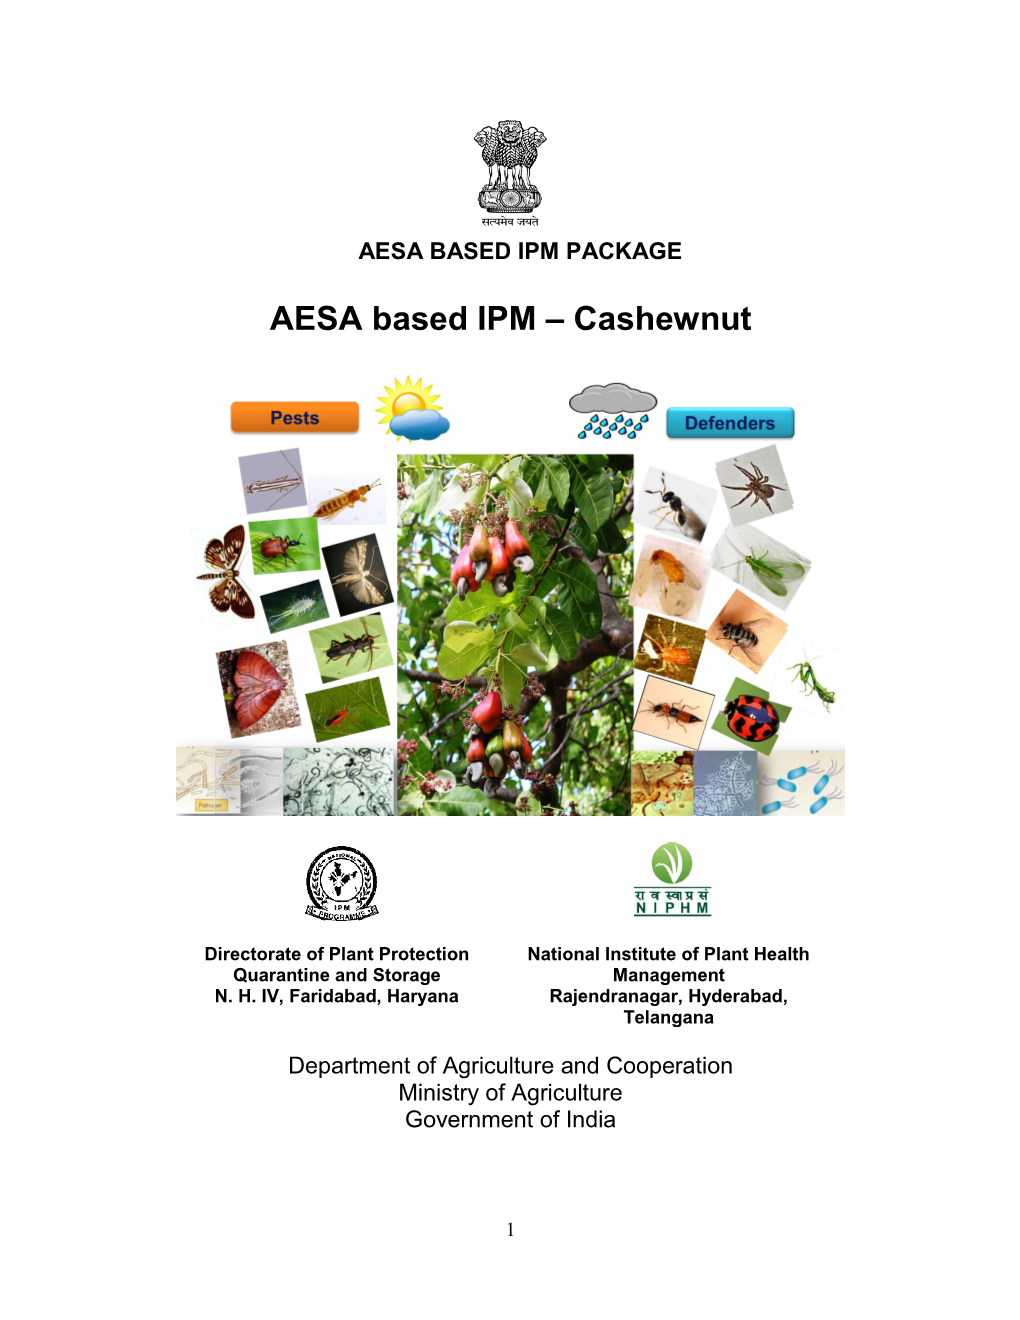 AESA Based IPM – Cashewnut